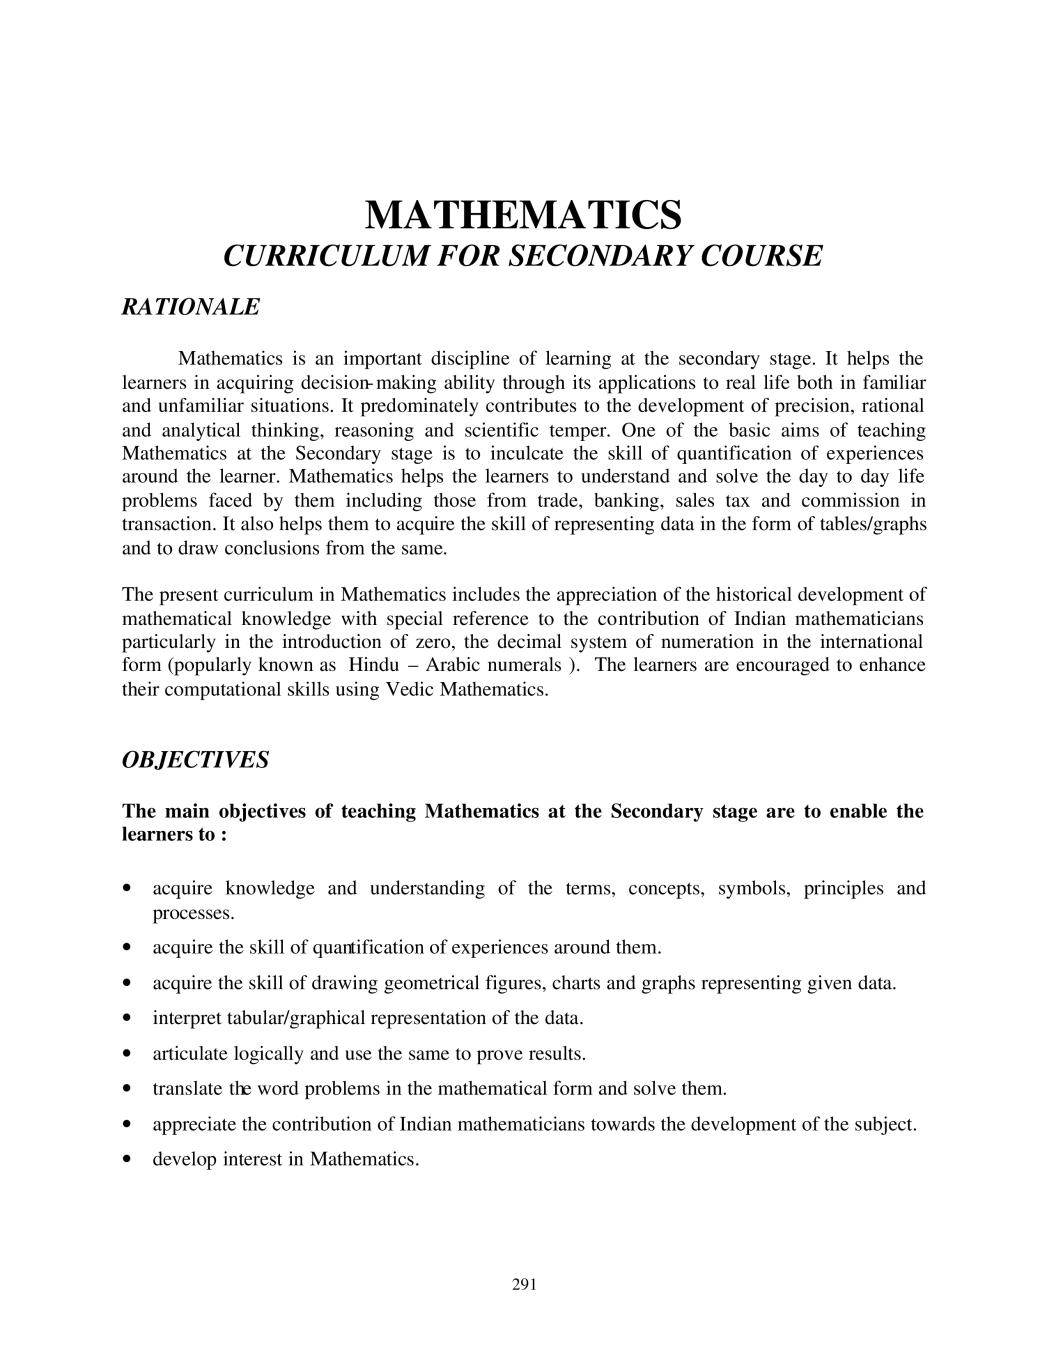 NIOS Class 10 Syllabus - Mathematics - Page 1